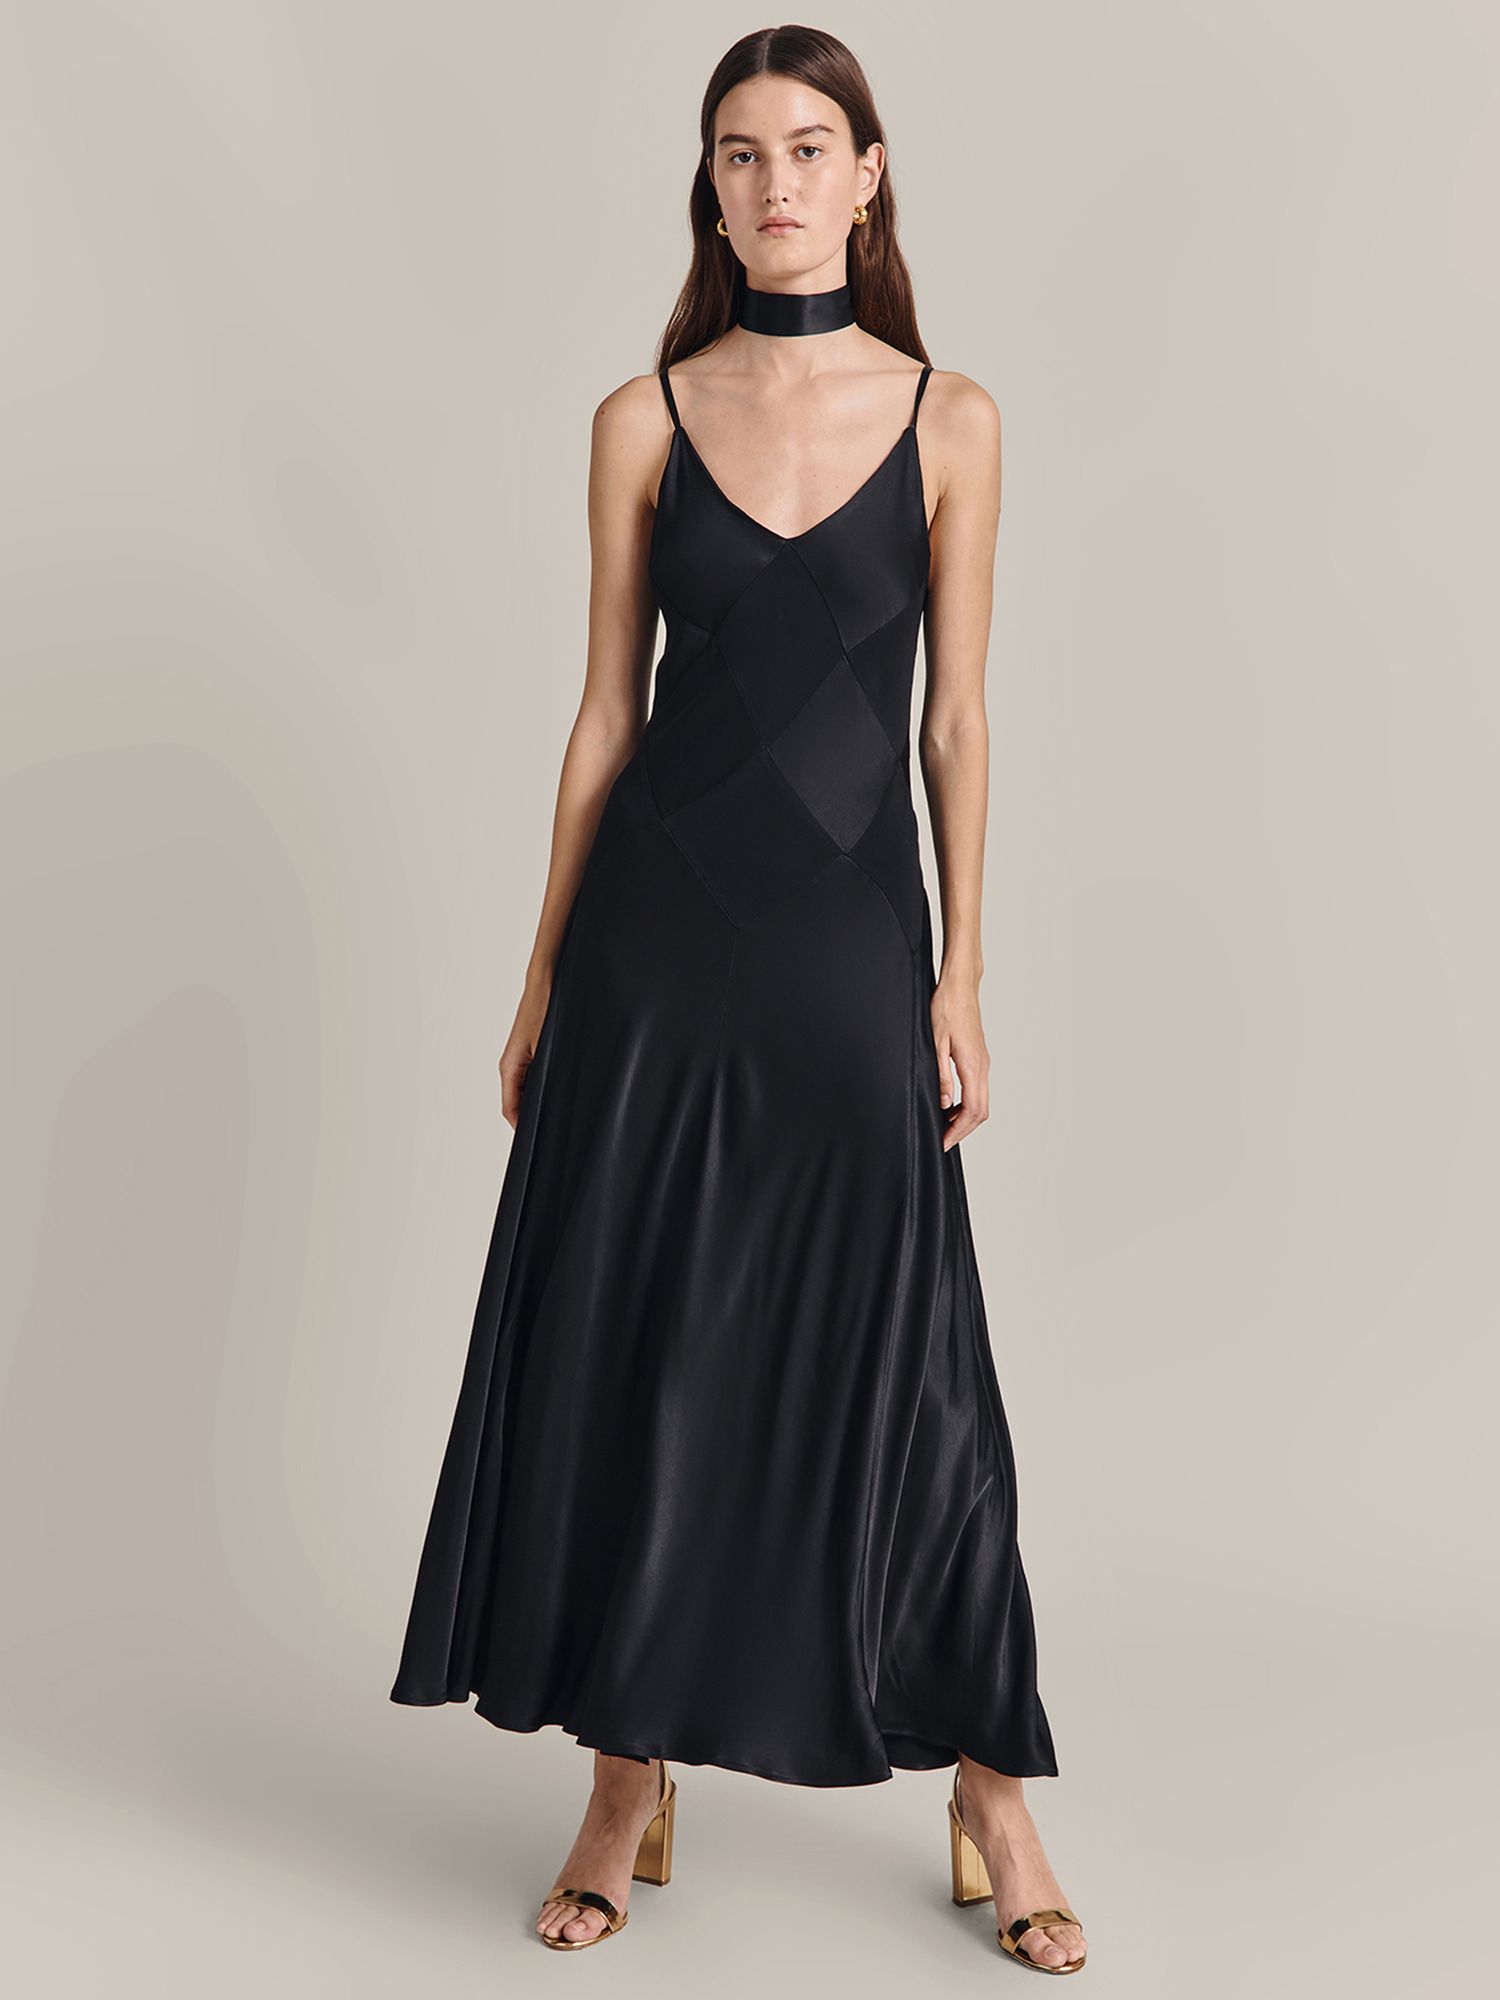 Ghost Nina Satin Maxi Dress, Black, M